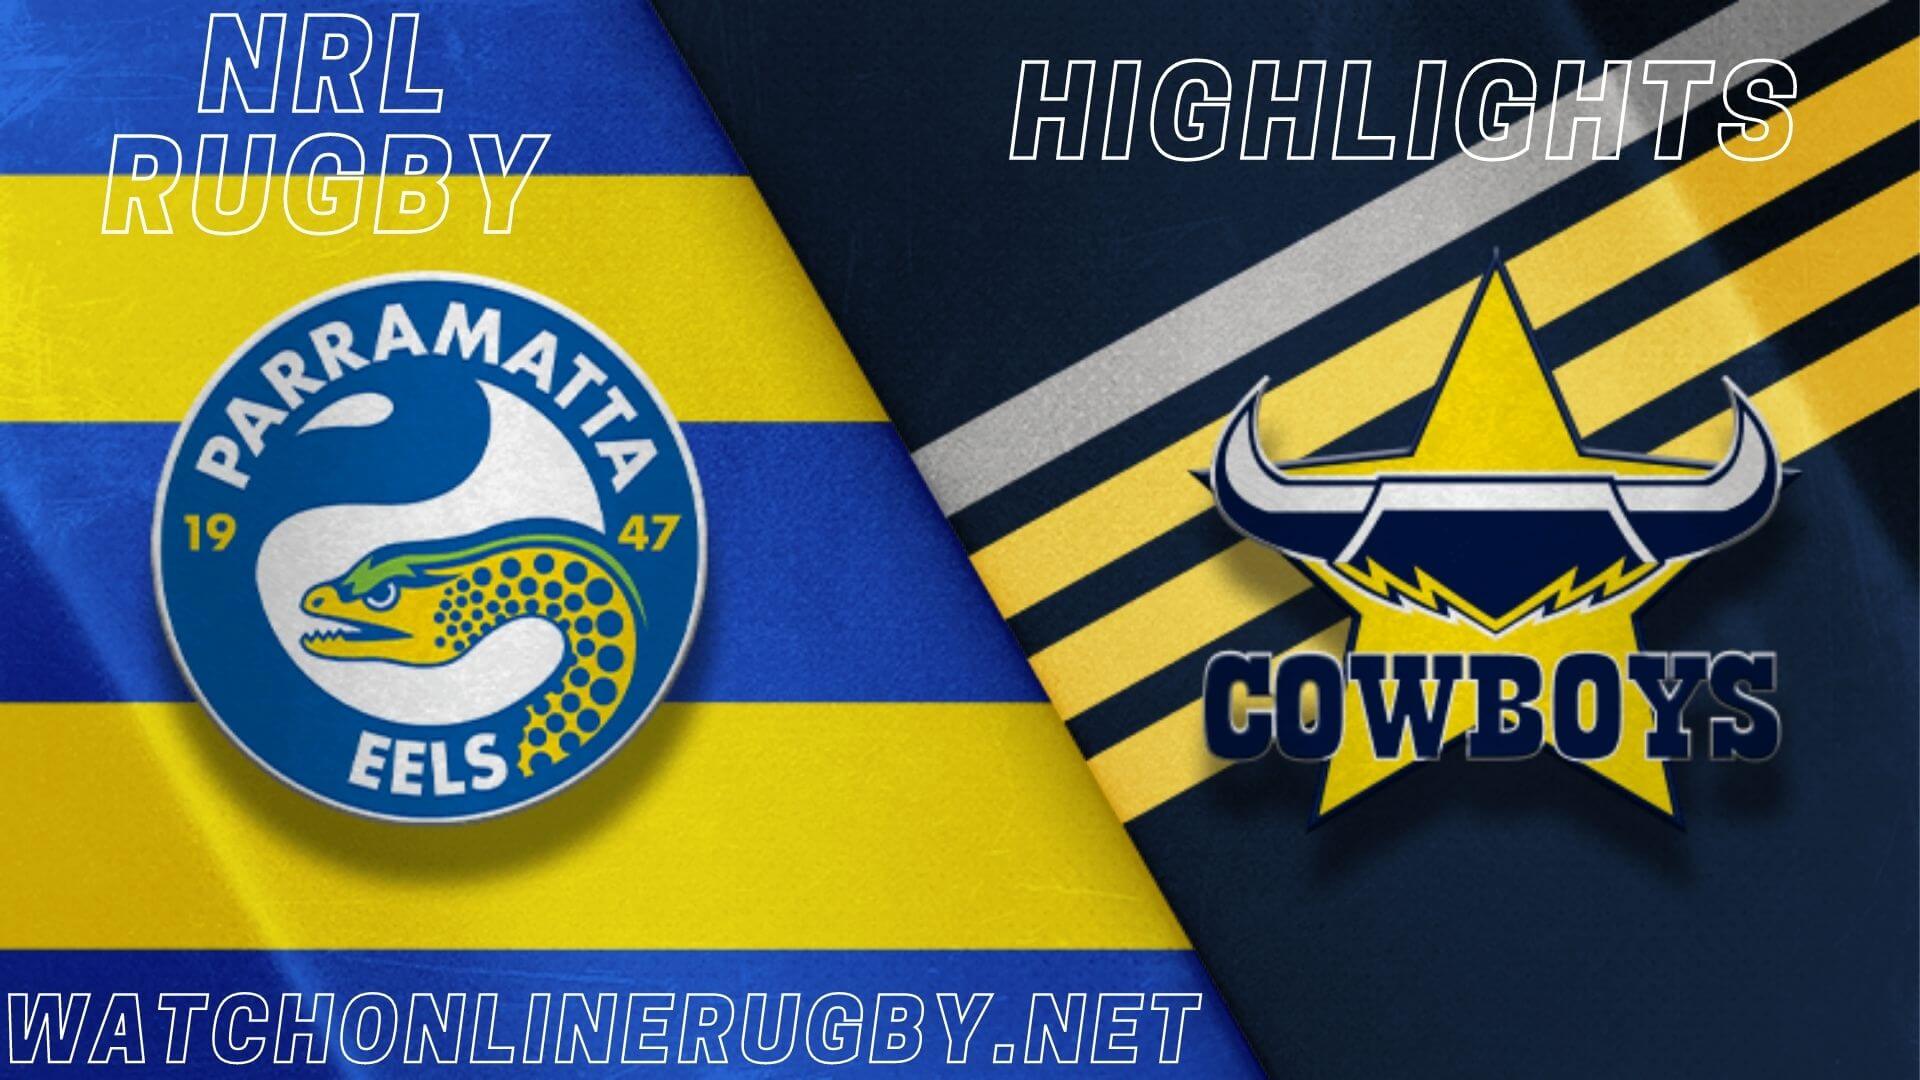 Eels Vs Cowboys Highlights RD 8 NRL Rugby